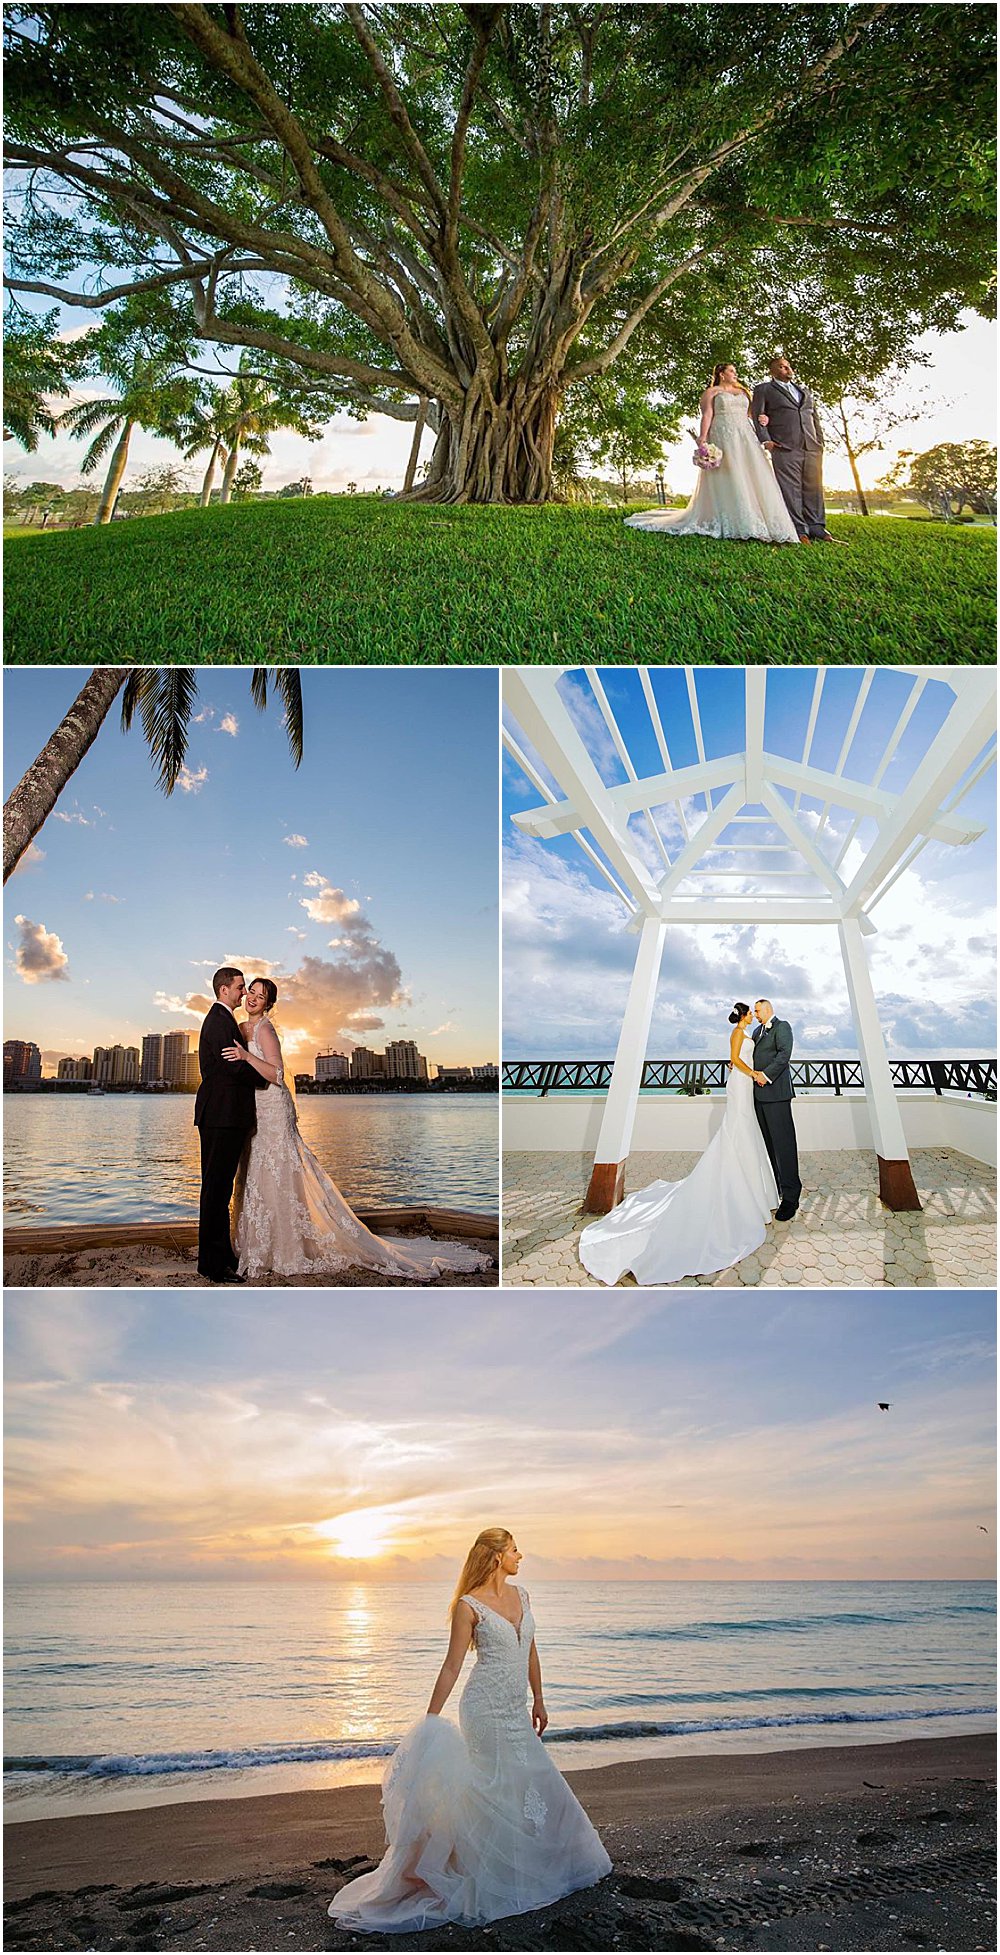 Top Palm Beach Wedding Photographers | Palm Beach, FL | Married in Palm Beach | www.marriedinpalmbeach.com | Captured Beauty Photography